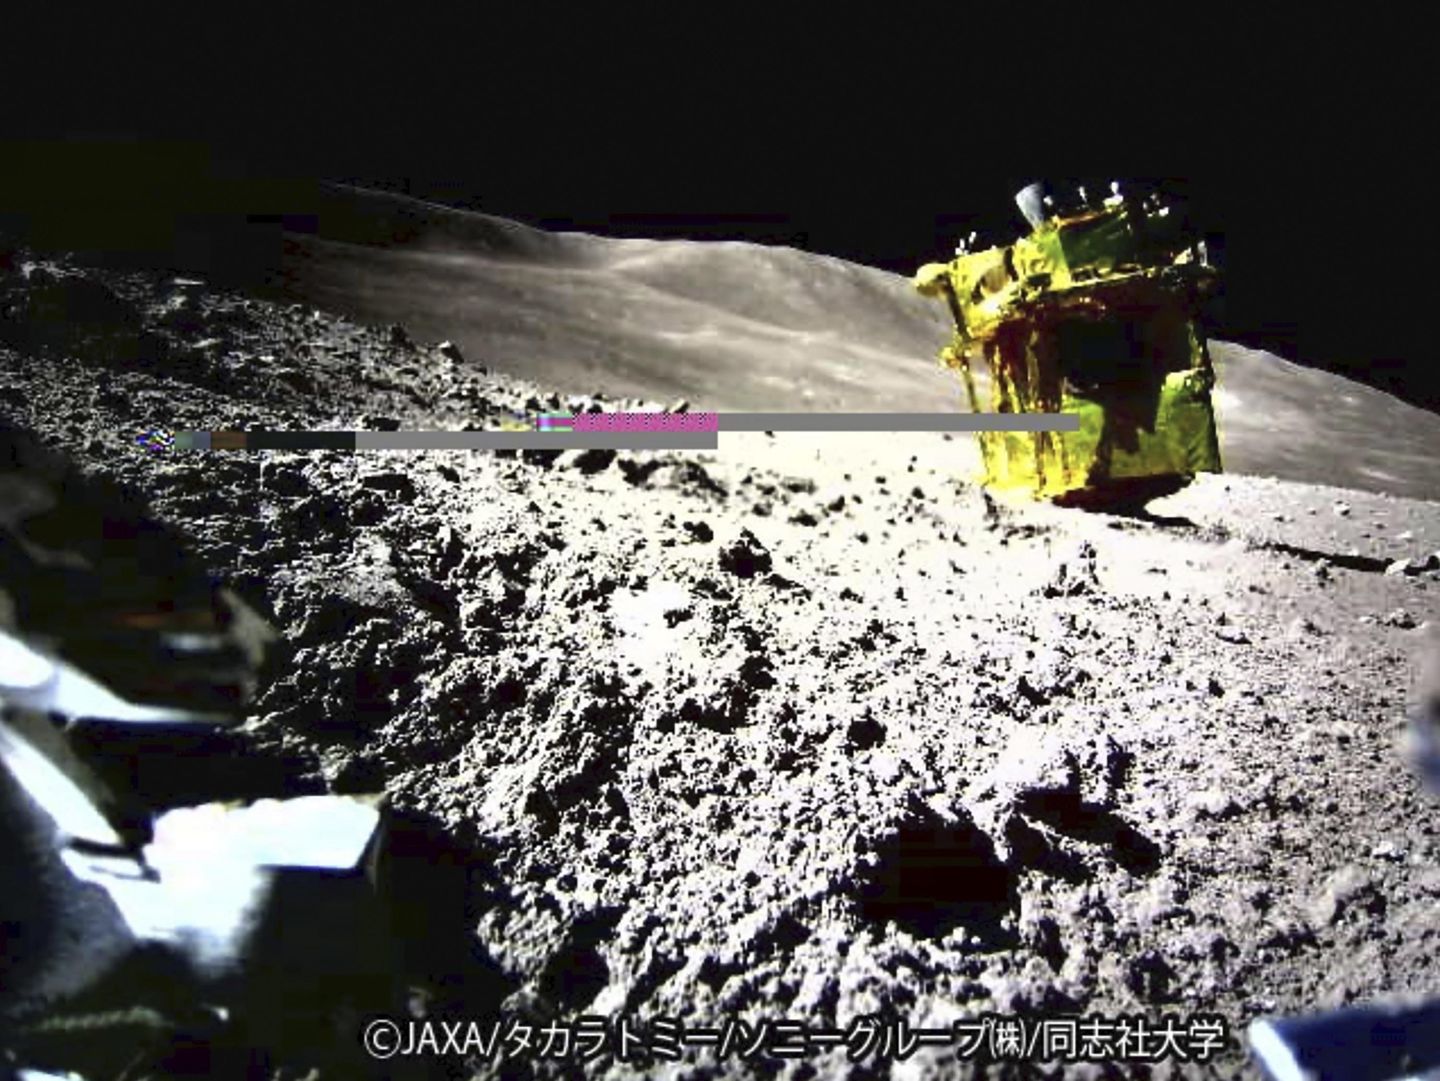 Japan's 'Lunar Sniper' comes back online, resumes operations on moon